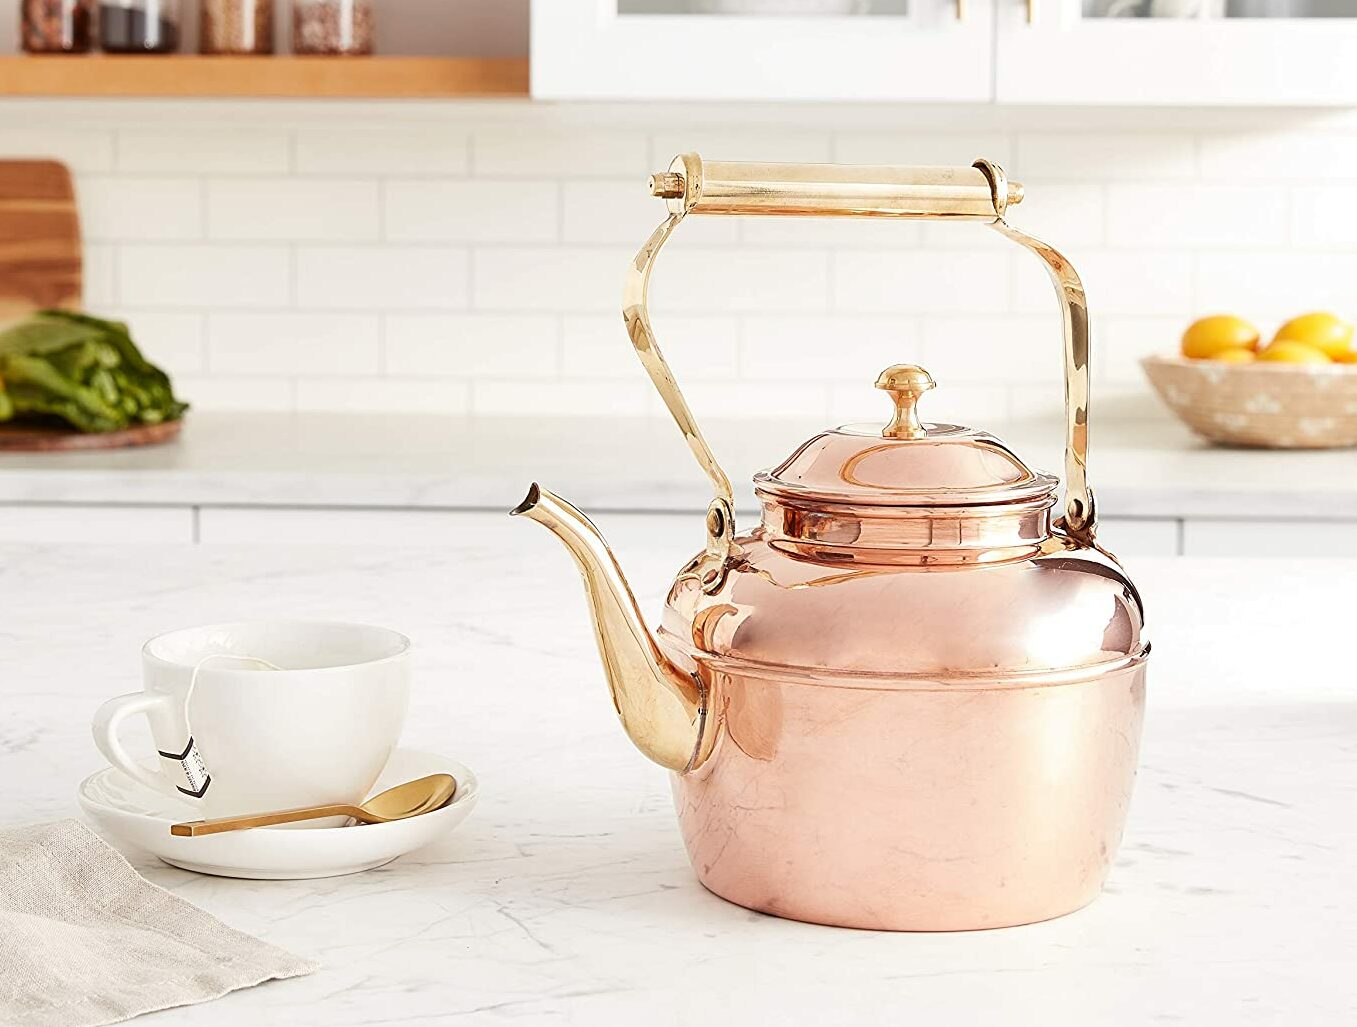 copper tea kettle on counter next to tea mug